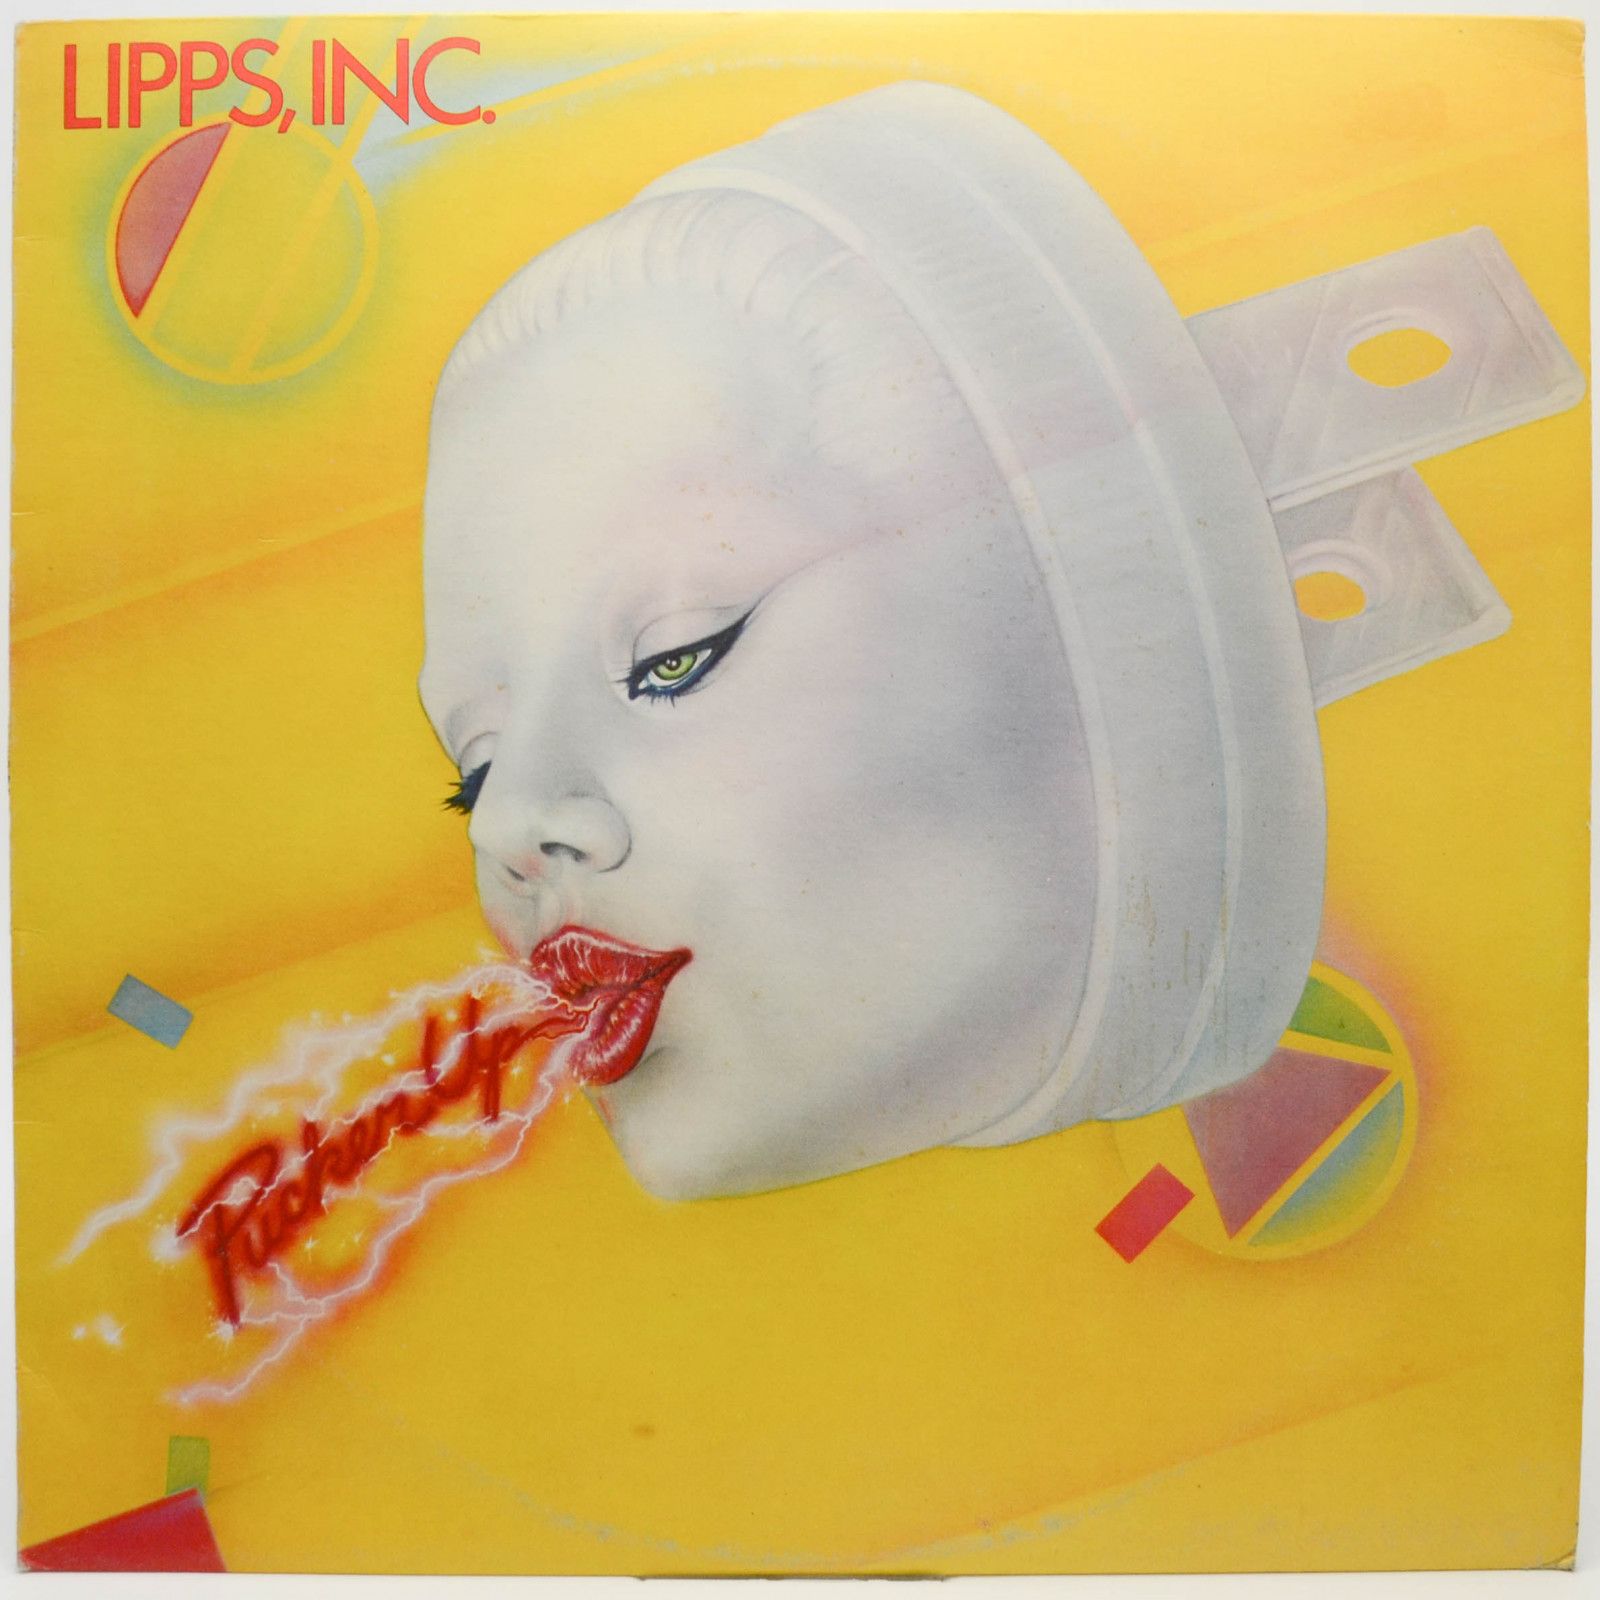 Lipps, Inc. — Pucker Up, 1980